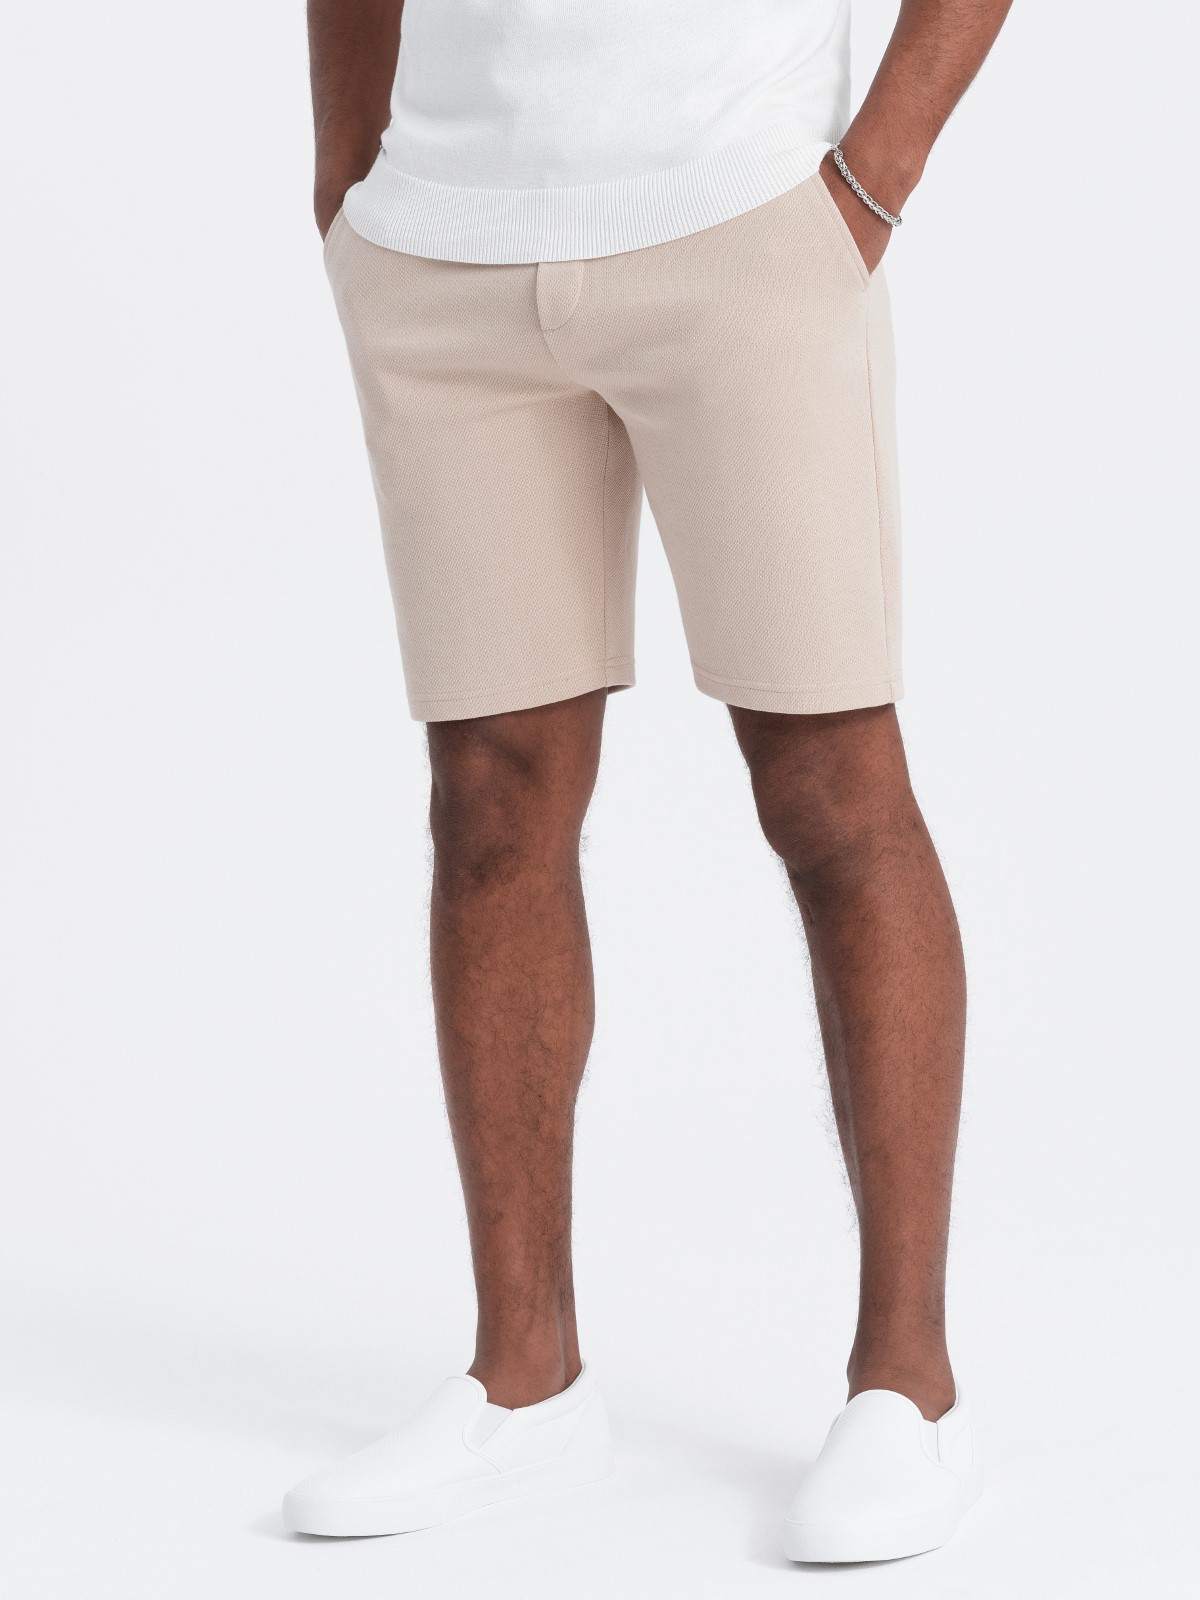 Edoti Men's casual short shorts